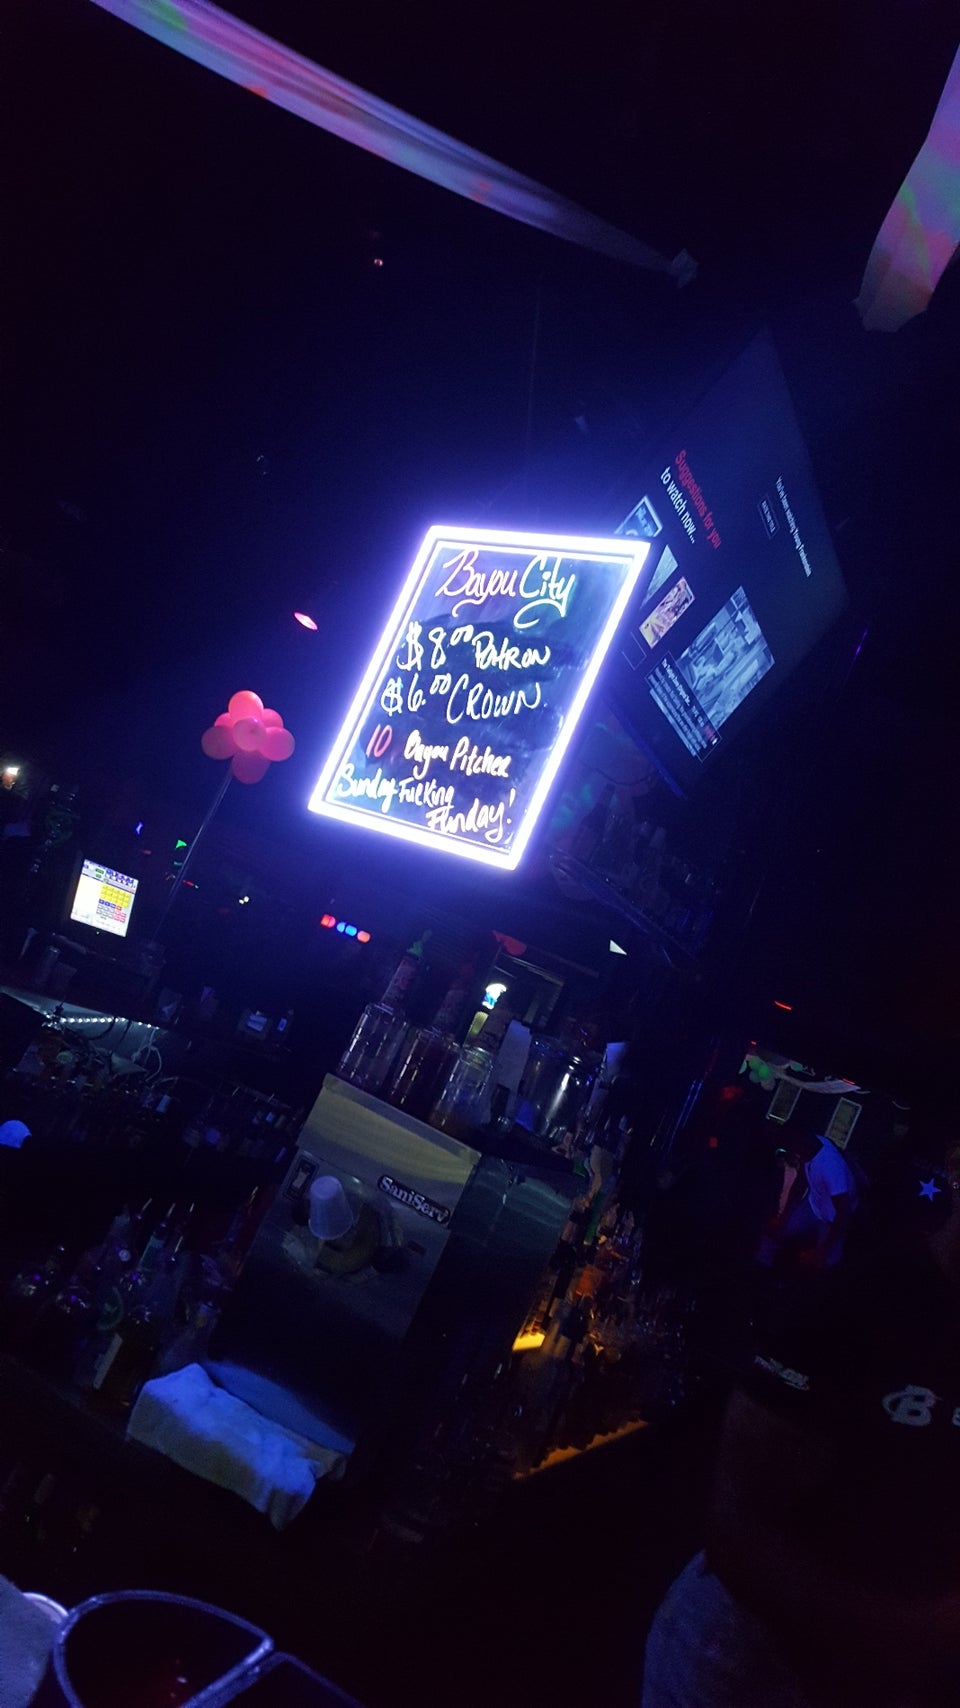 Photo of Bayou City Bar & Grill